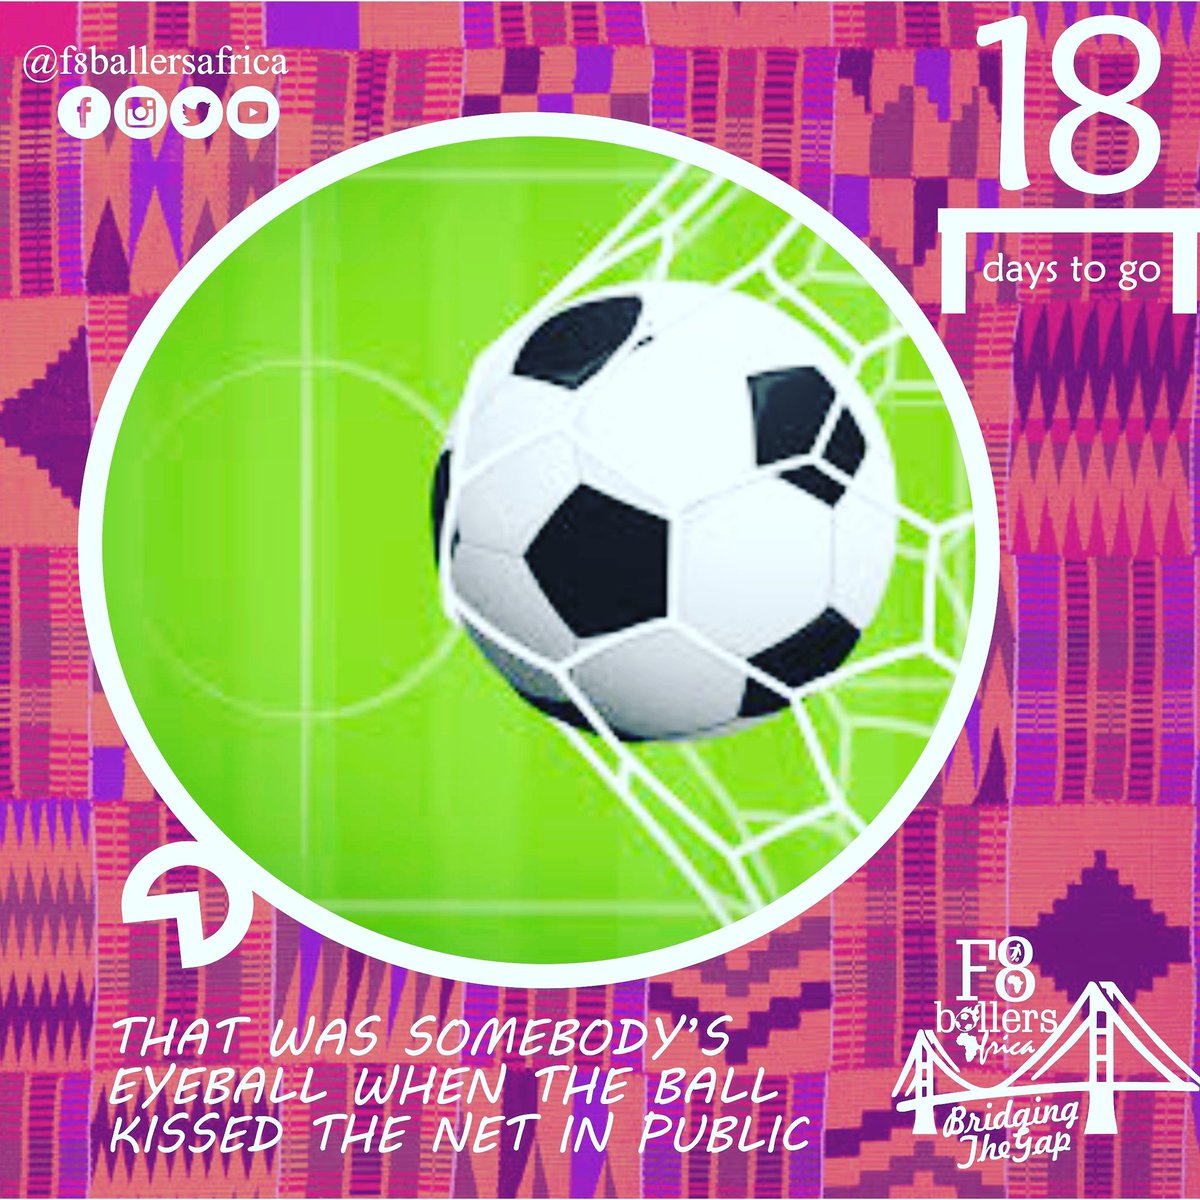 18DaysToGo

#Play #Friendship #Fundraising #Music #Dance #FootballTechniques #Youngplayers #NoveltyMatch #Footballacademies #Africa #Nigeria #TotalCAFCL #Football #FoodAndDrinks #Excitements #New #footballlive #Birthday #skills #Penalty #FootballQuiz #Passes #Celebrities #Winning